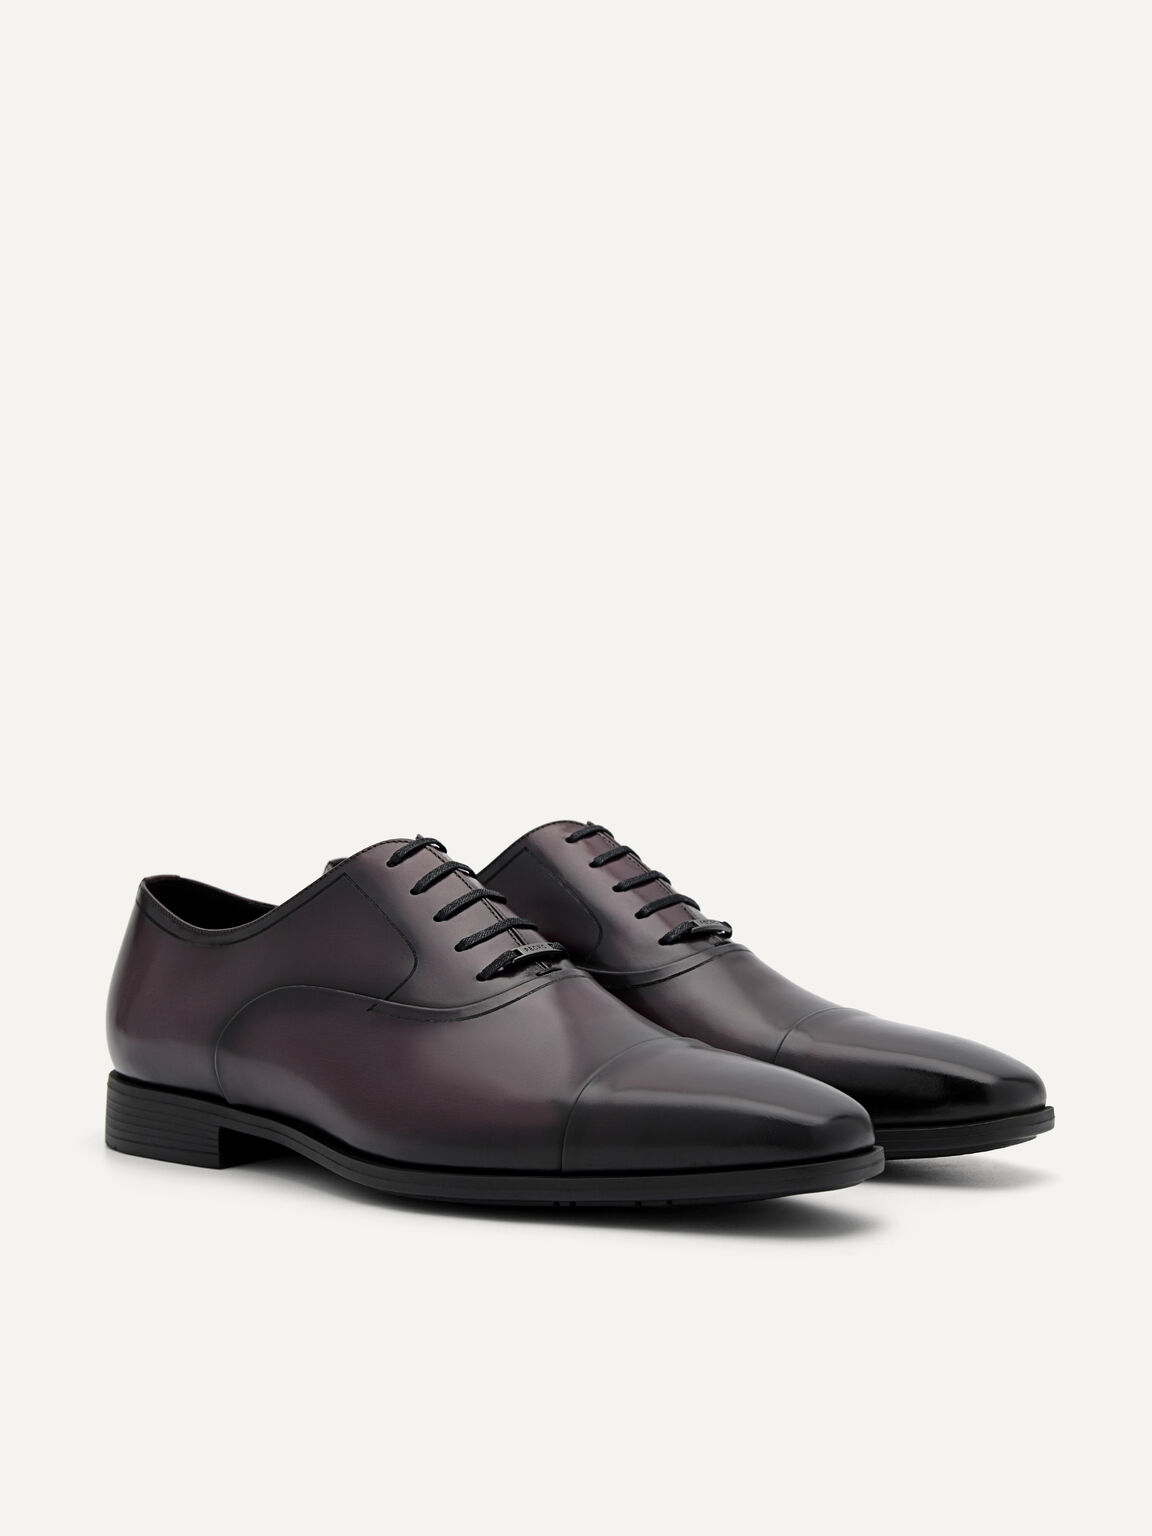 Altitude Lightweight Oxford Shoes, Dark Brown, hi-res